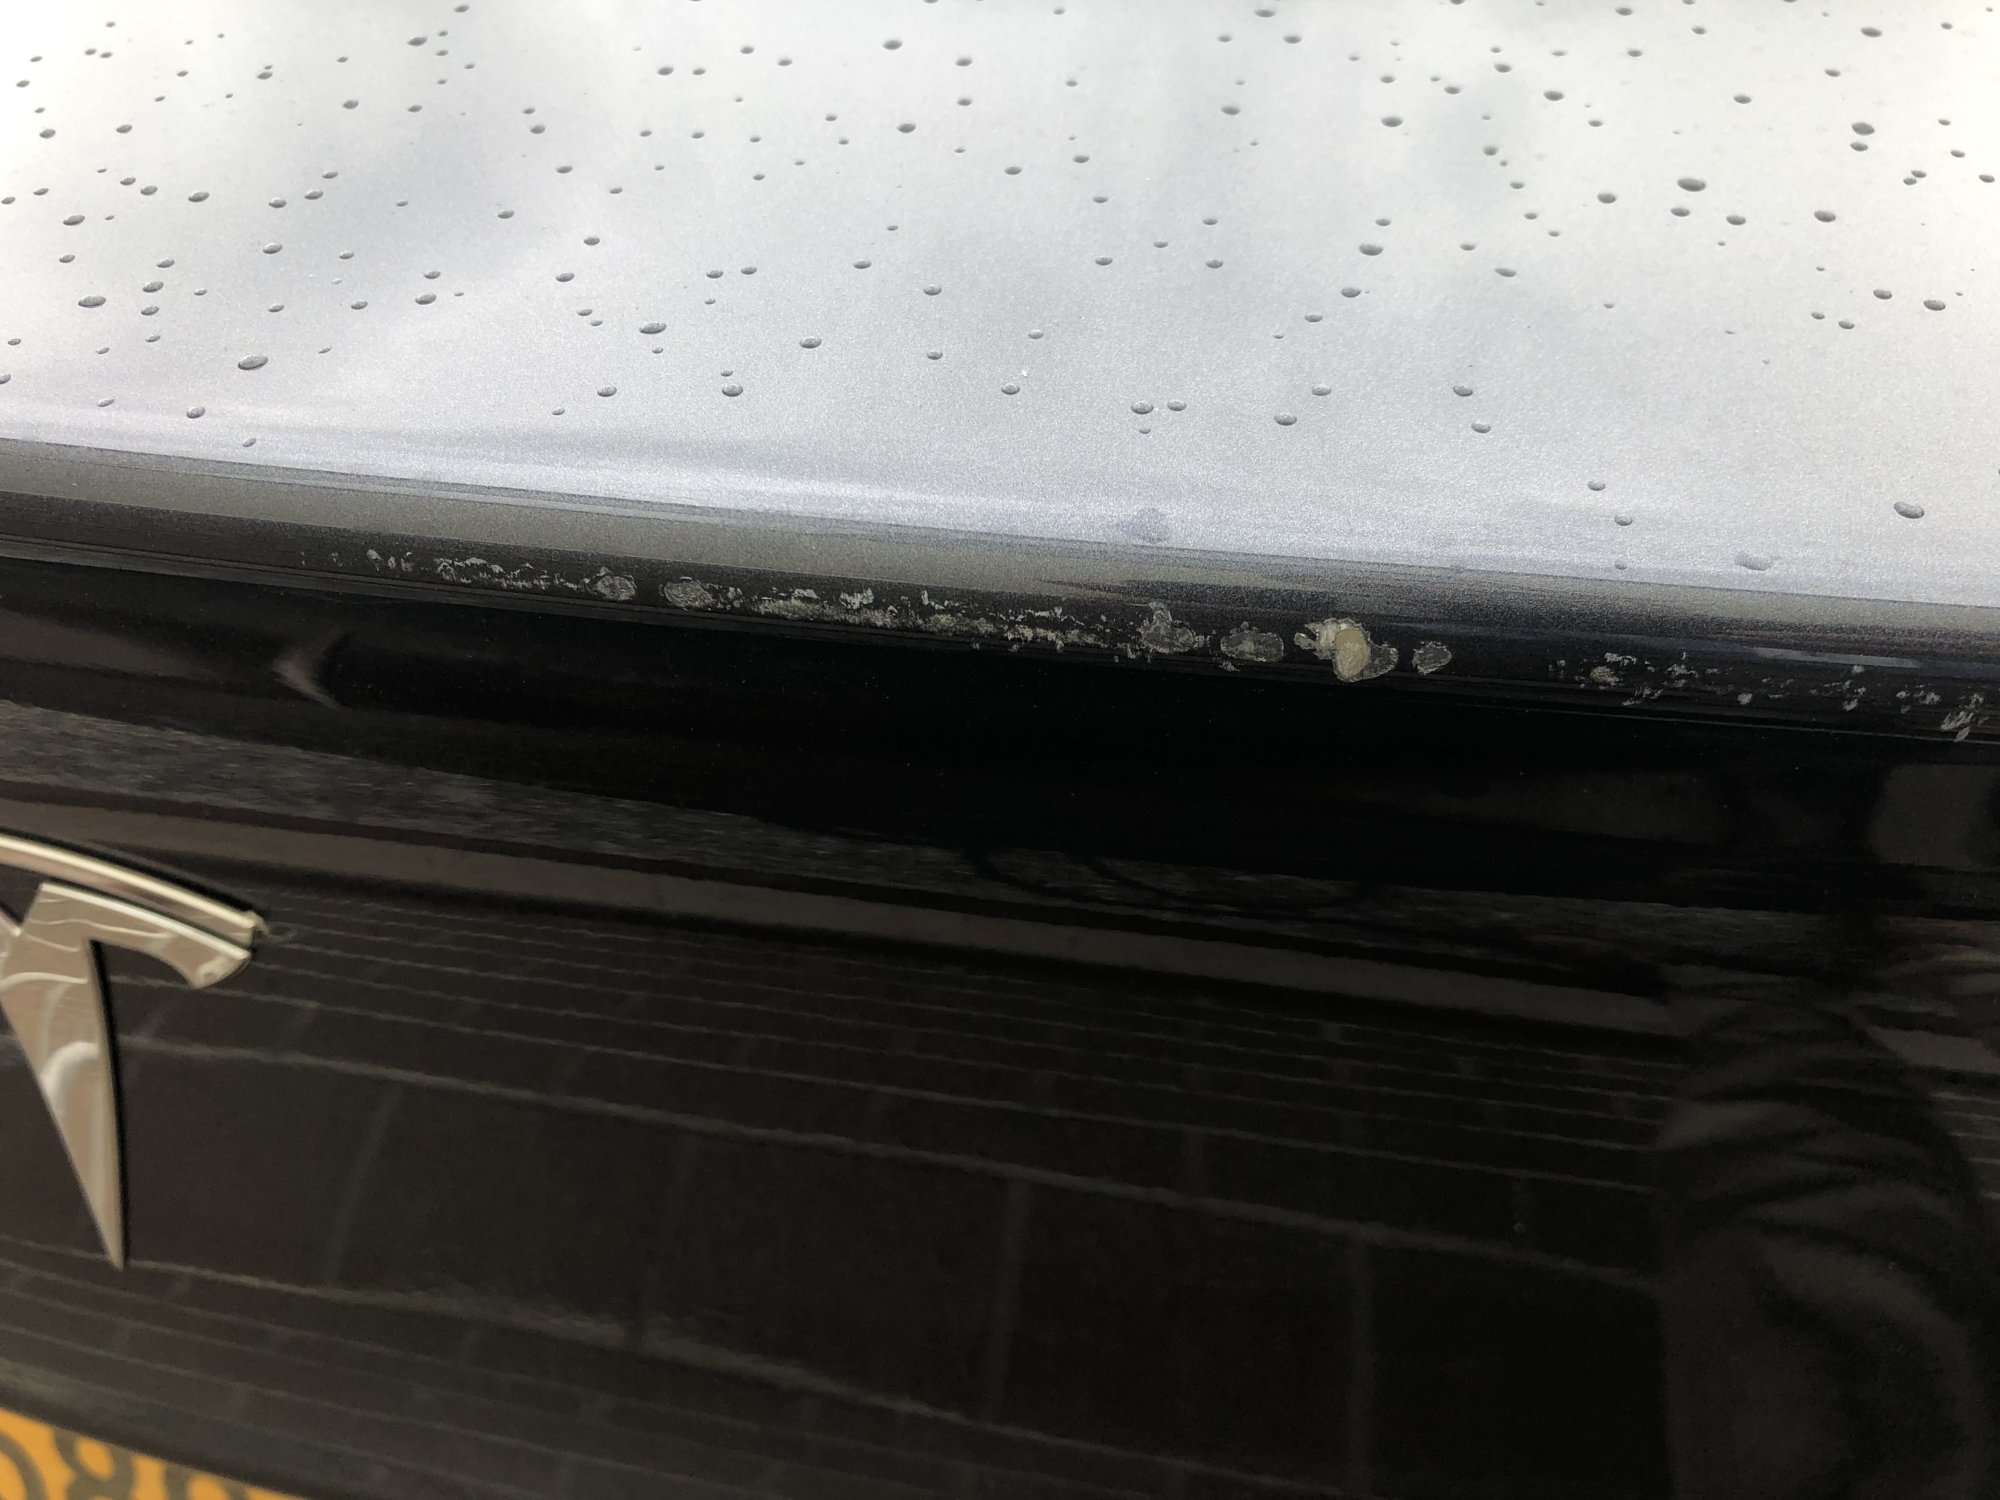 M3 upper trunk edge damage.jpg